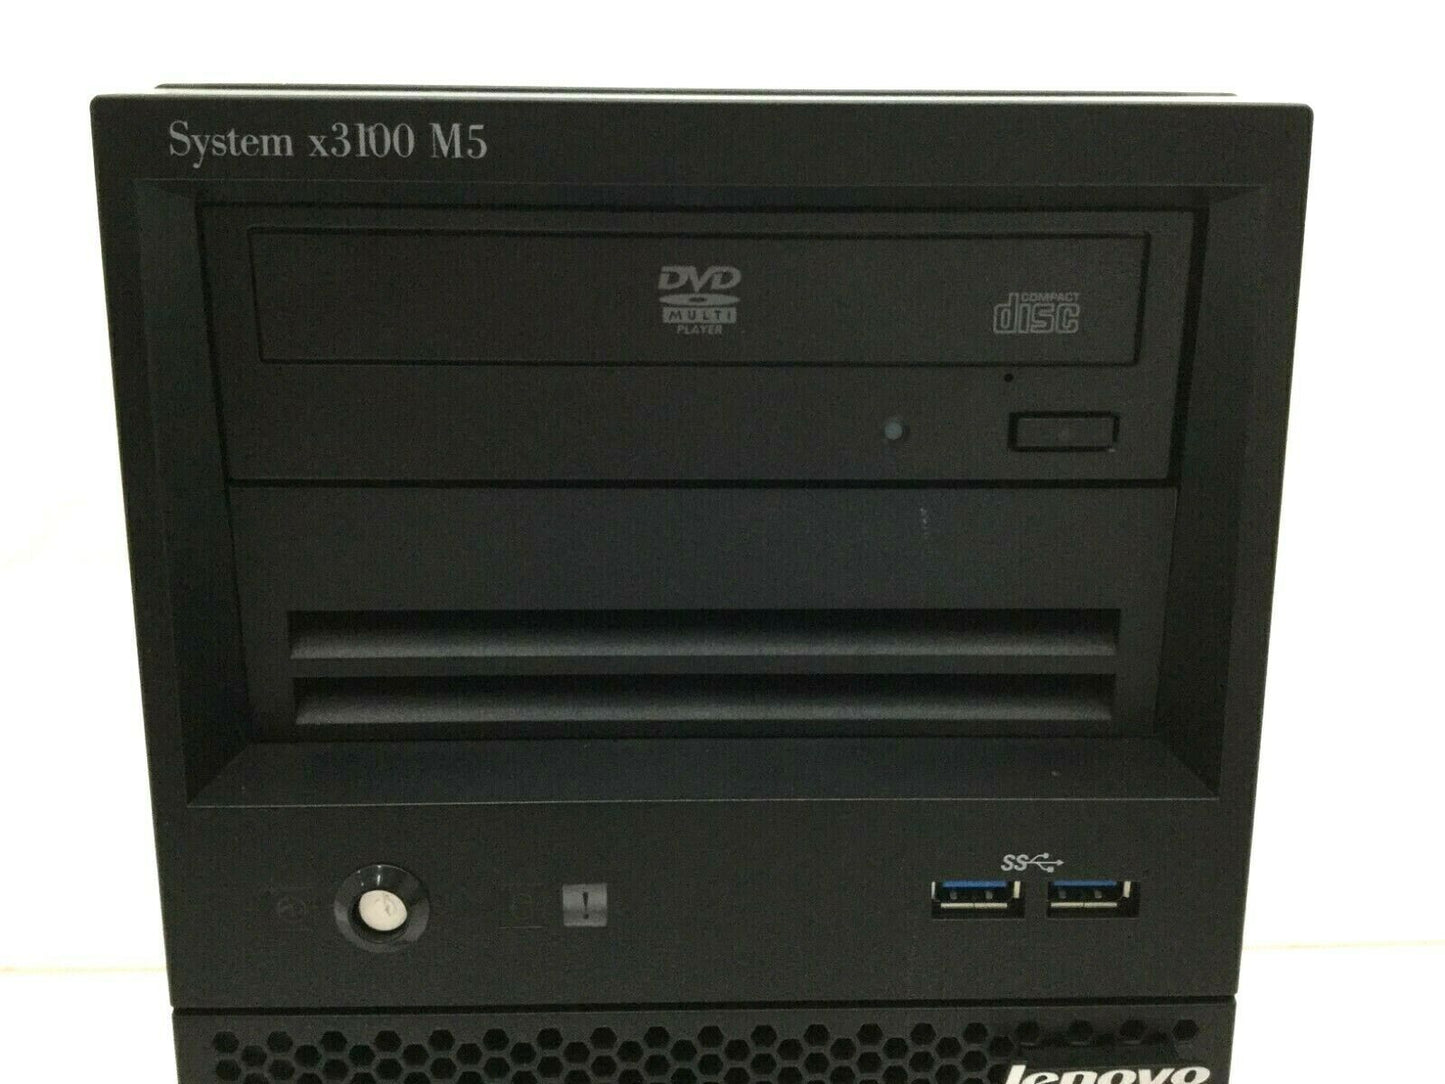 Lenovo 5457-AC1 x3100 M5 CTO Tower Server, Used